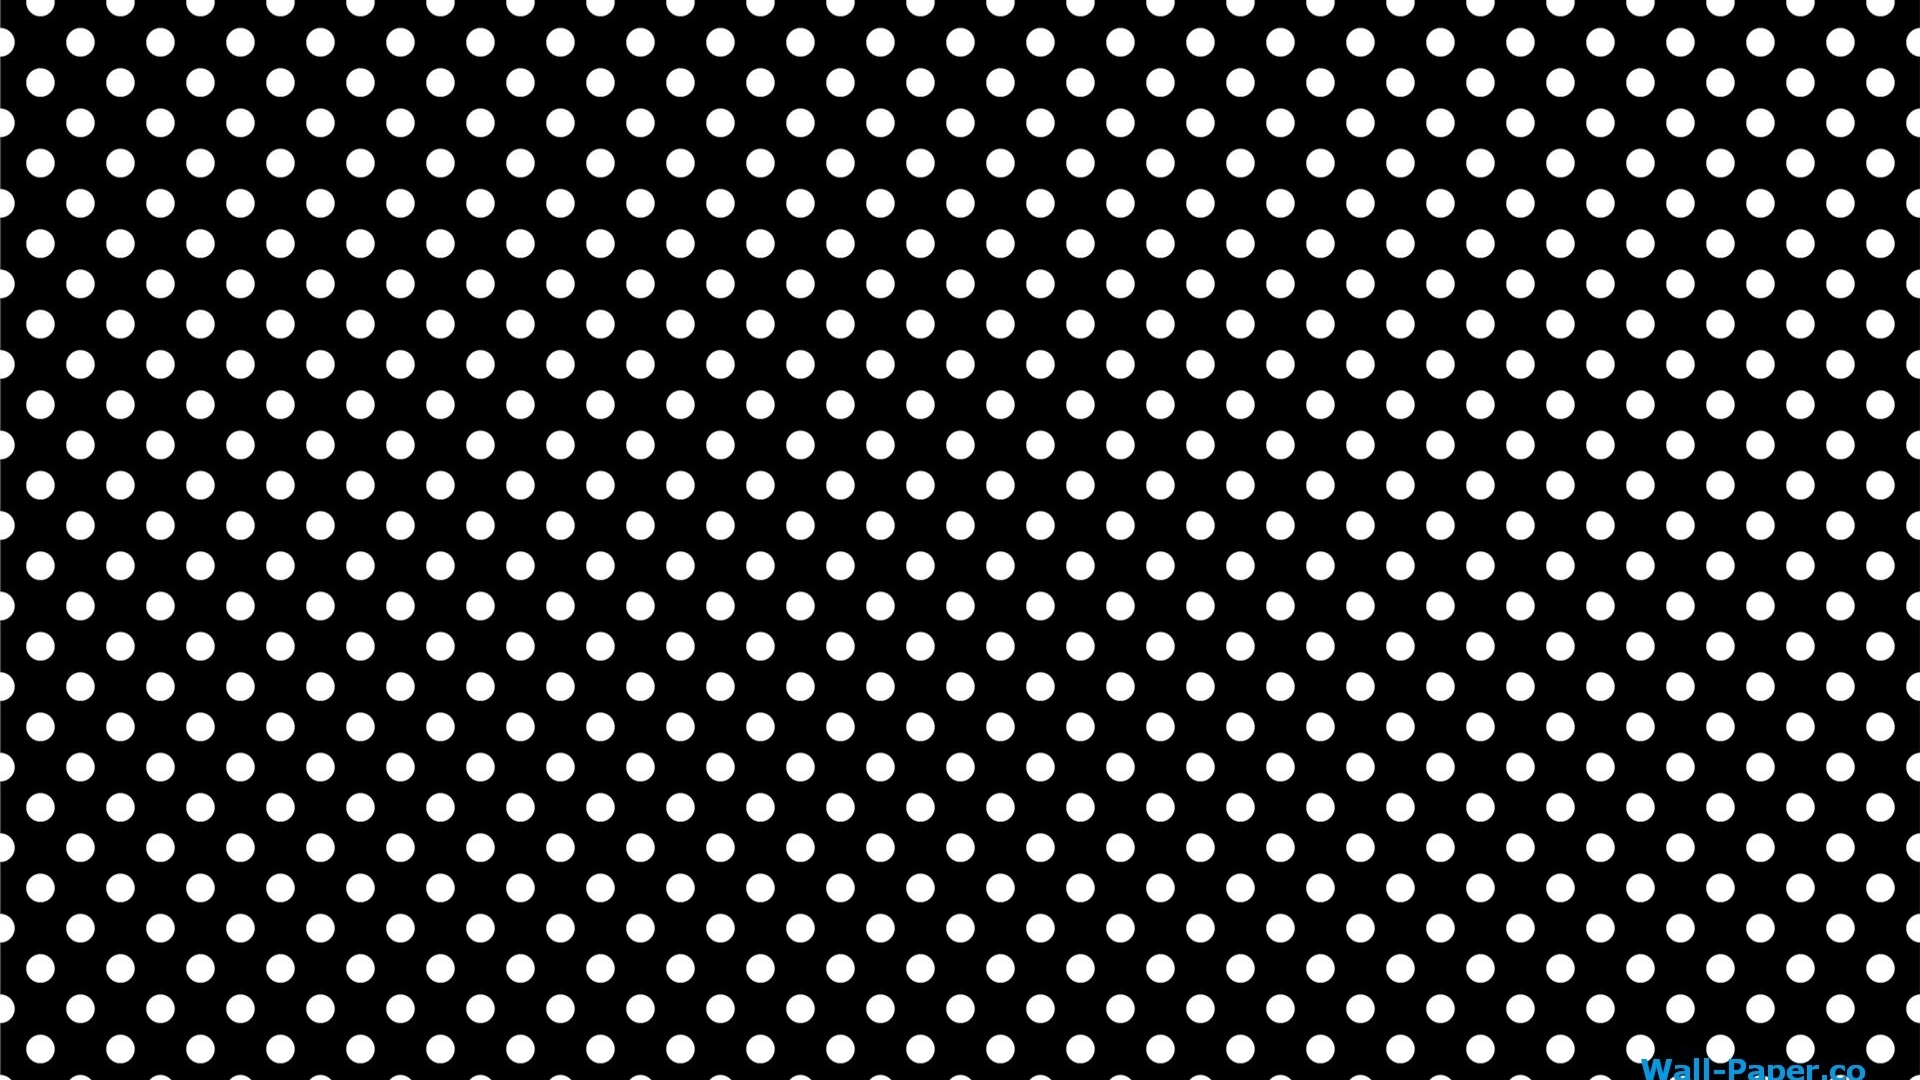 43+] Black and White Spot Wallpaper - WallpaperSafari